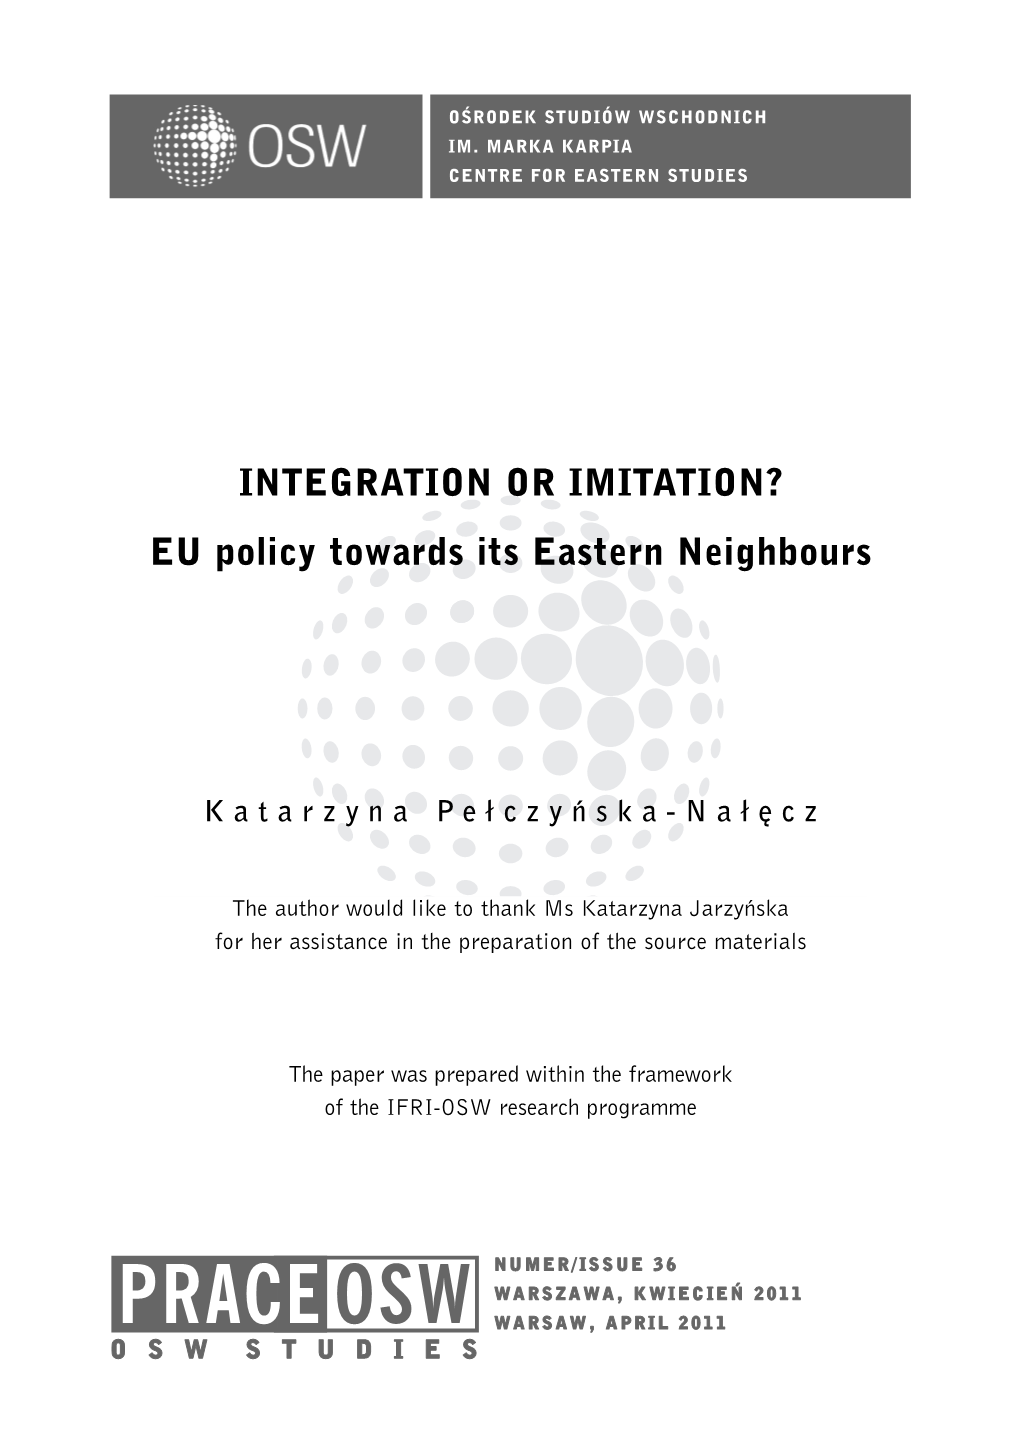 EU Policy Towards Its Eastern Neighbours